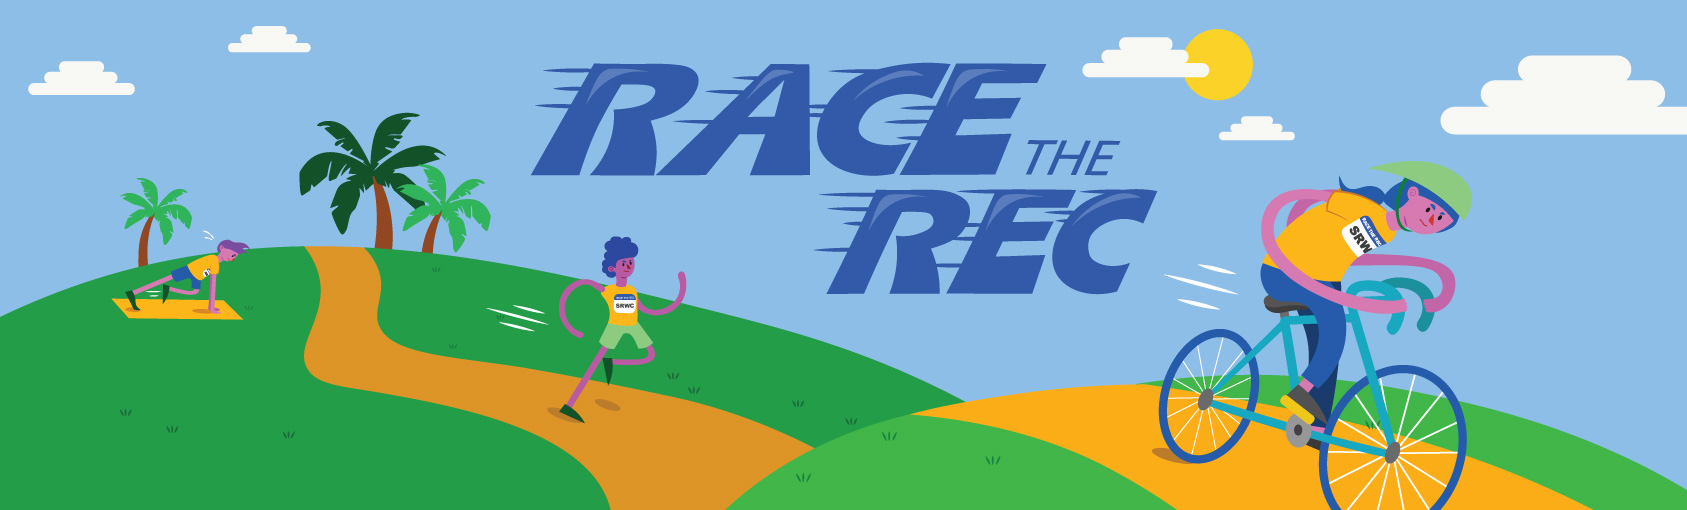 race the rec